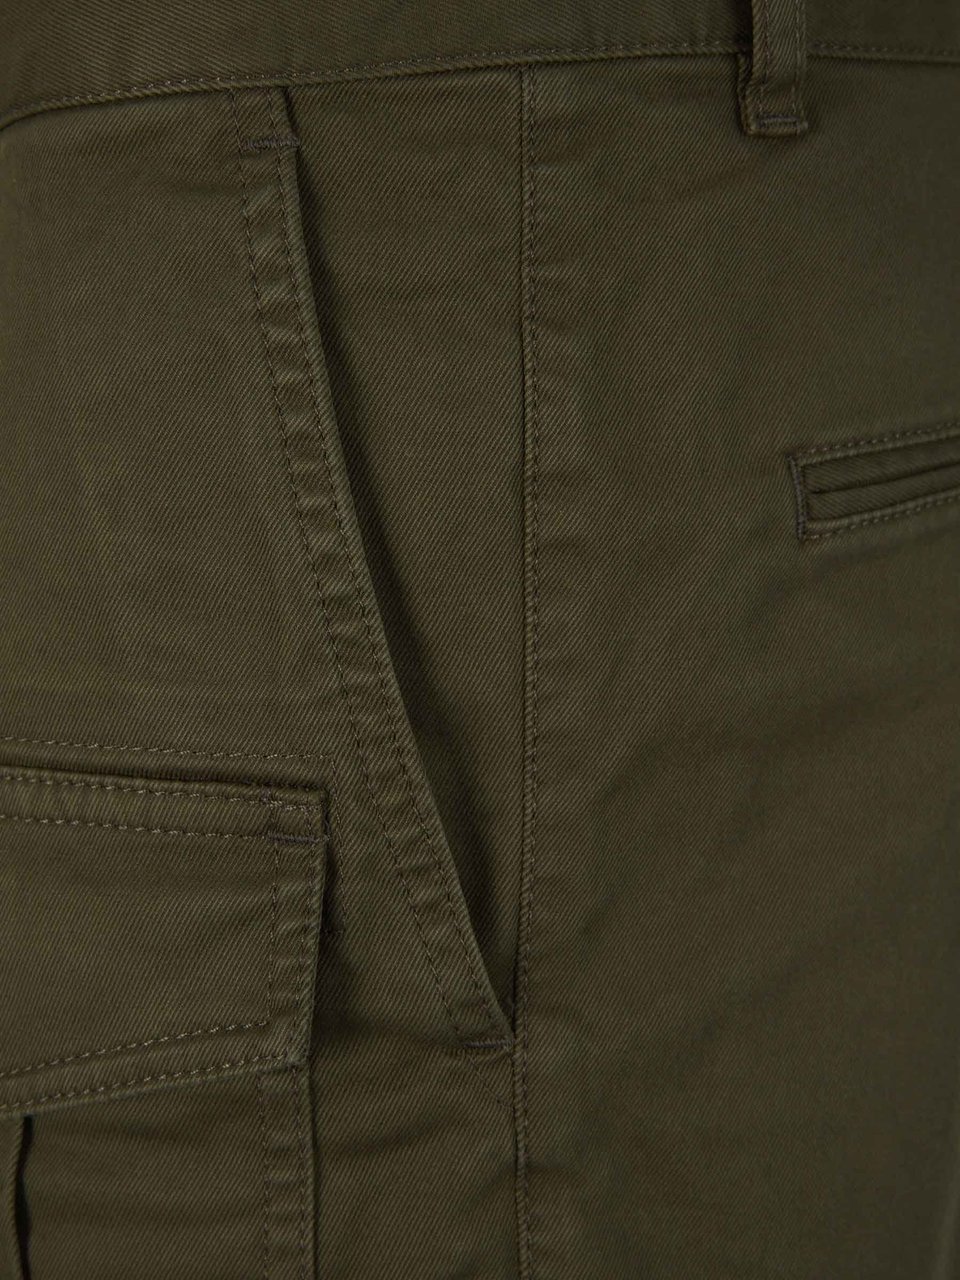 Dsquared2 Pockets Cotton Bermuda Shorts Groen